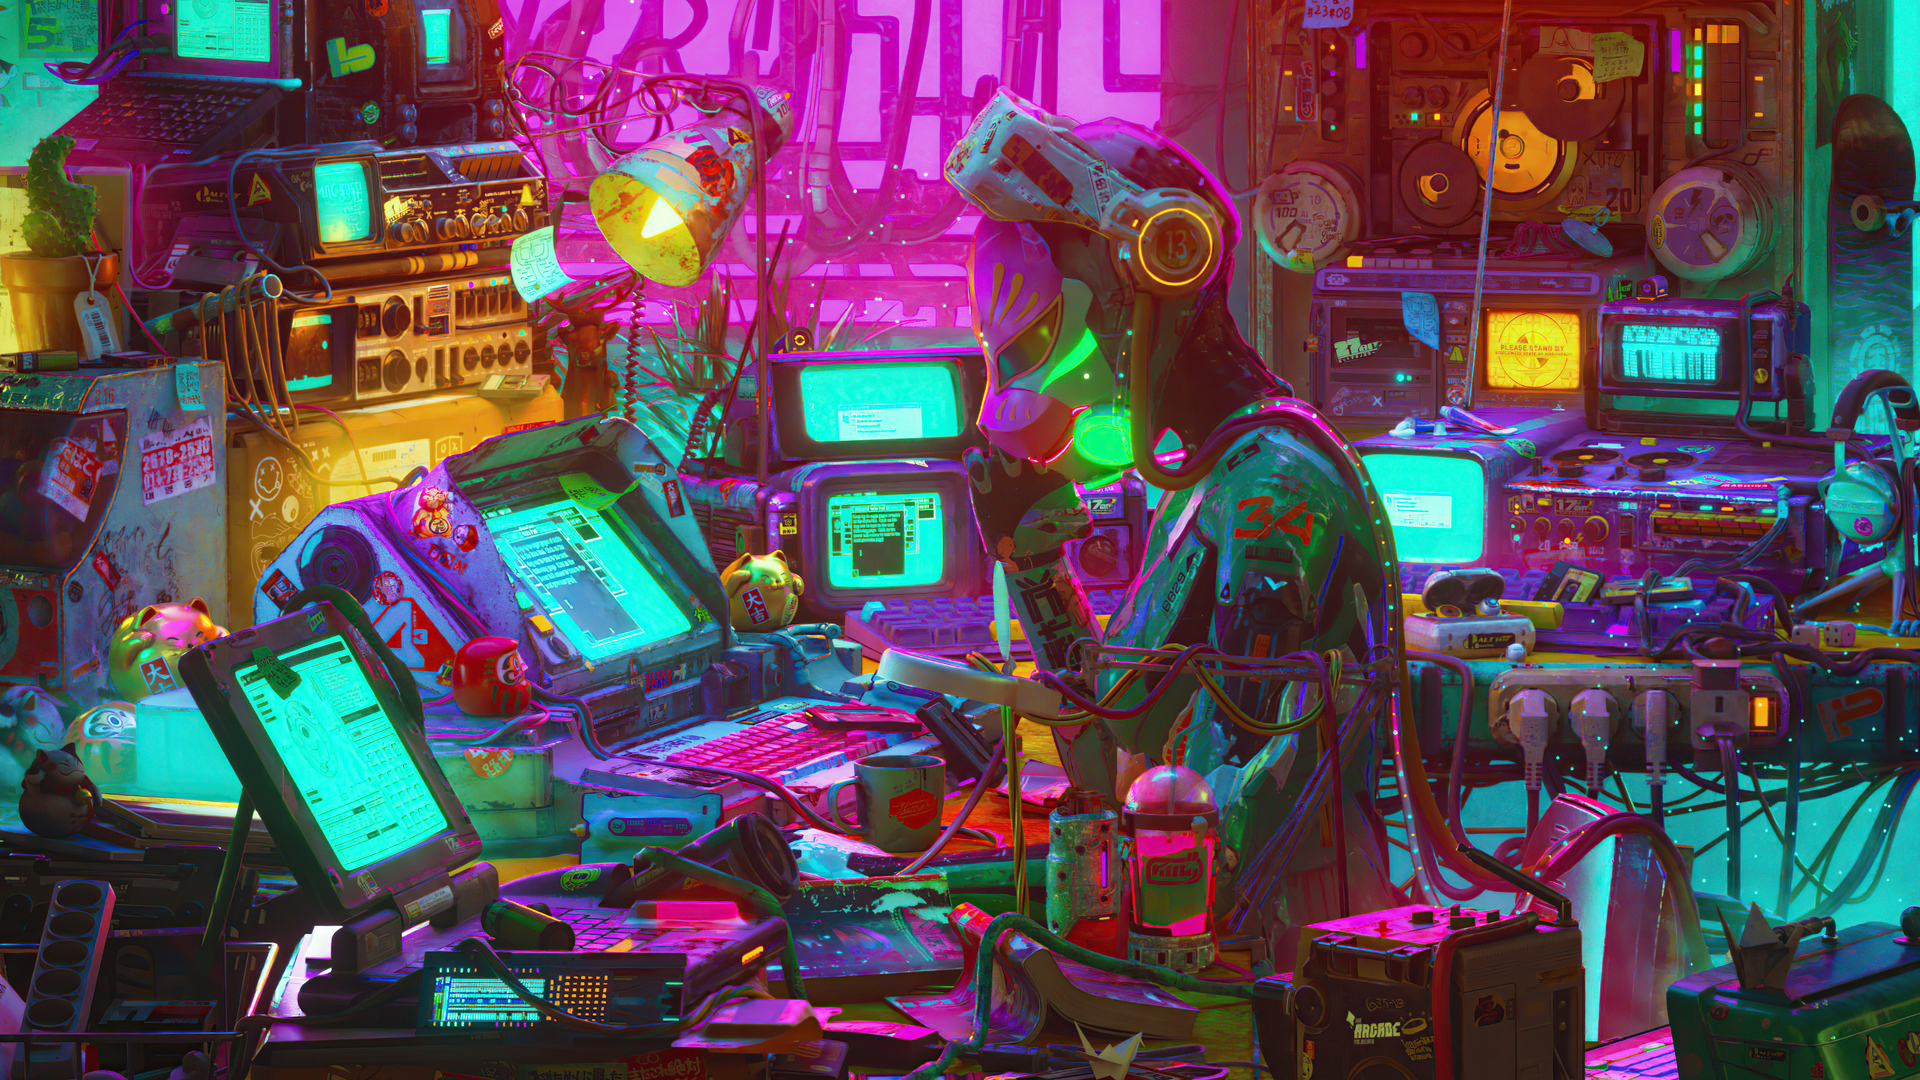 General 1920x1080 room indoors environment science fiction colorful cyberpunk computer cyborg messy headphones digital art artwork